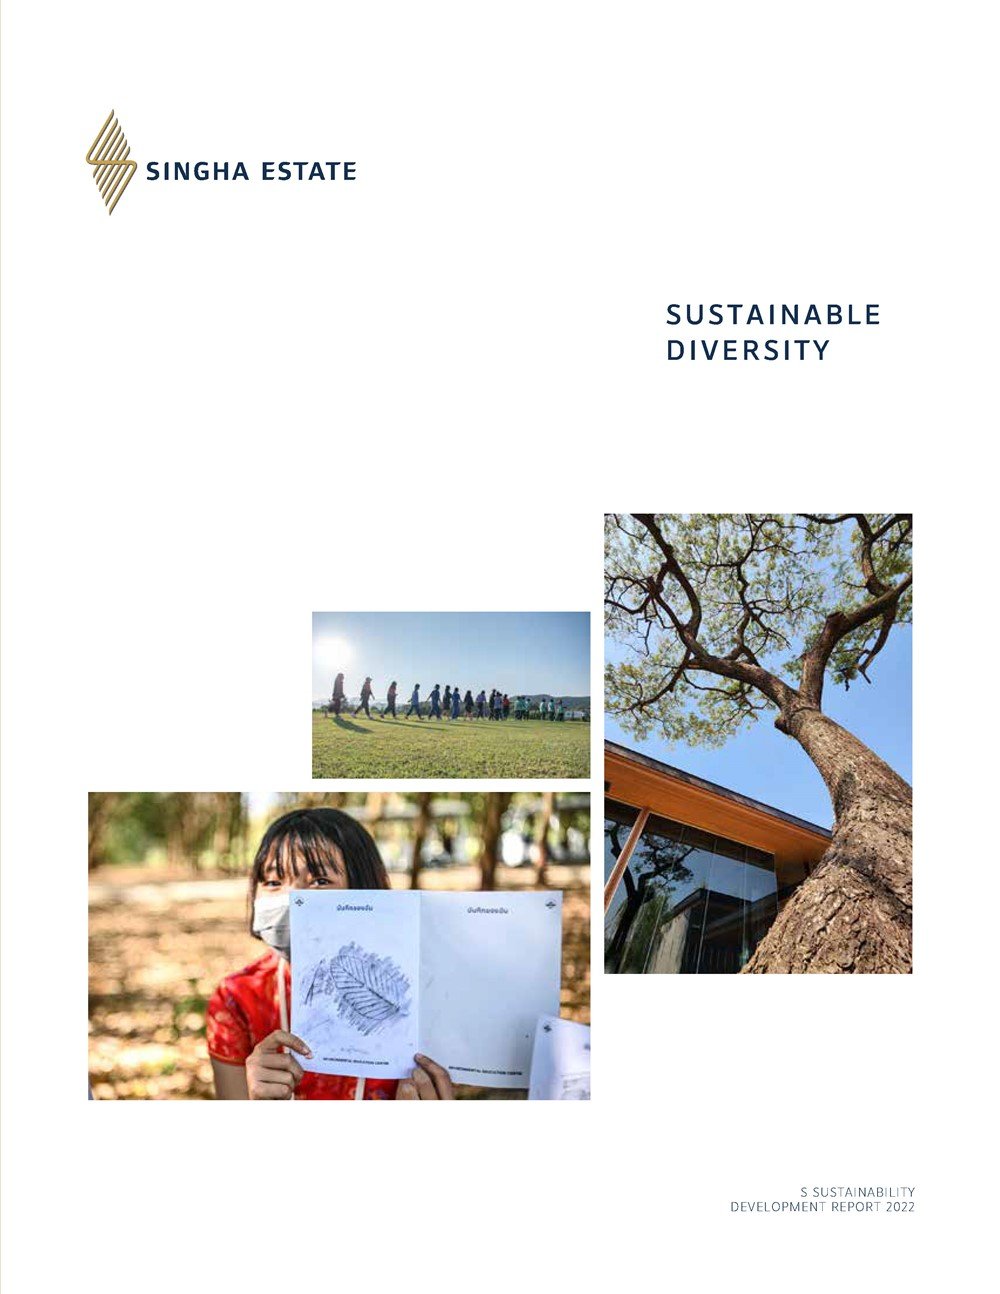 Sustainability Development Report 2022